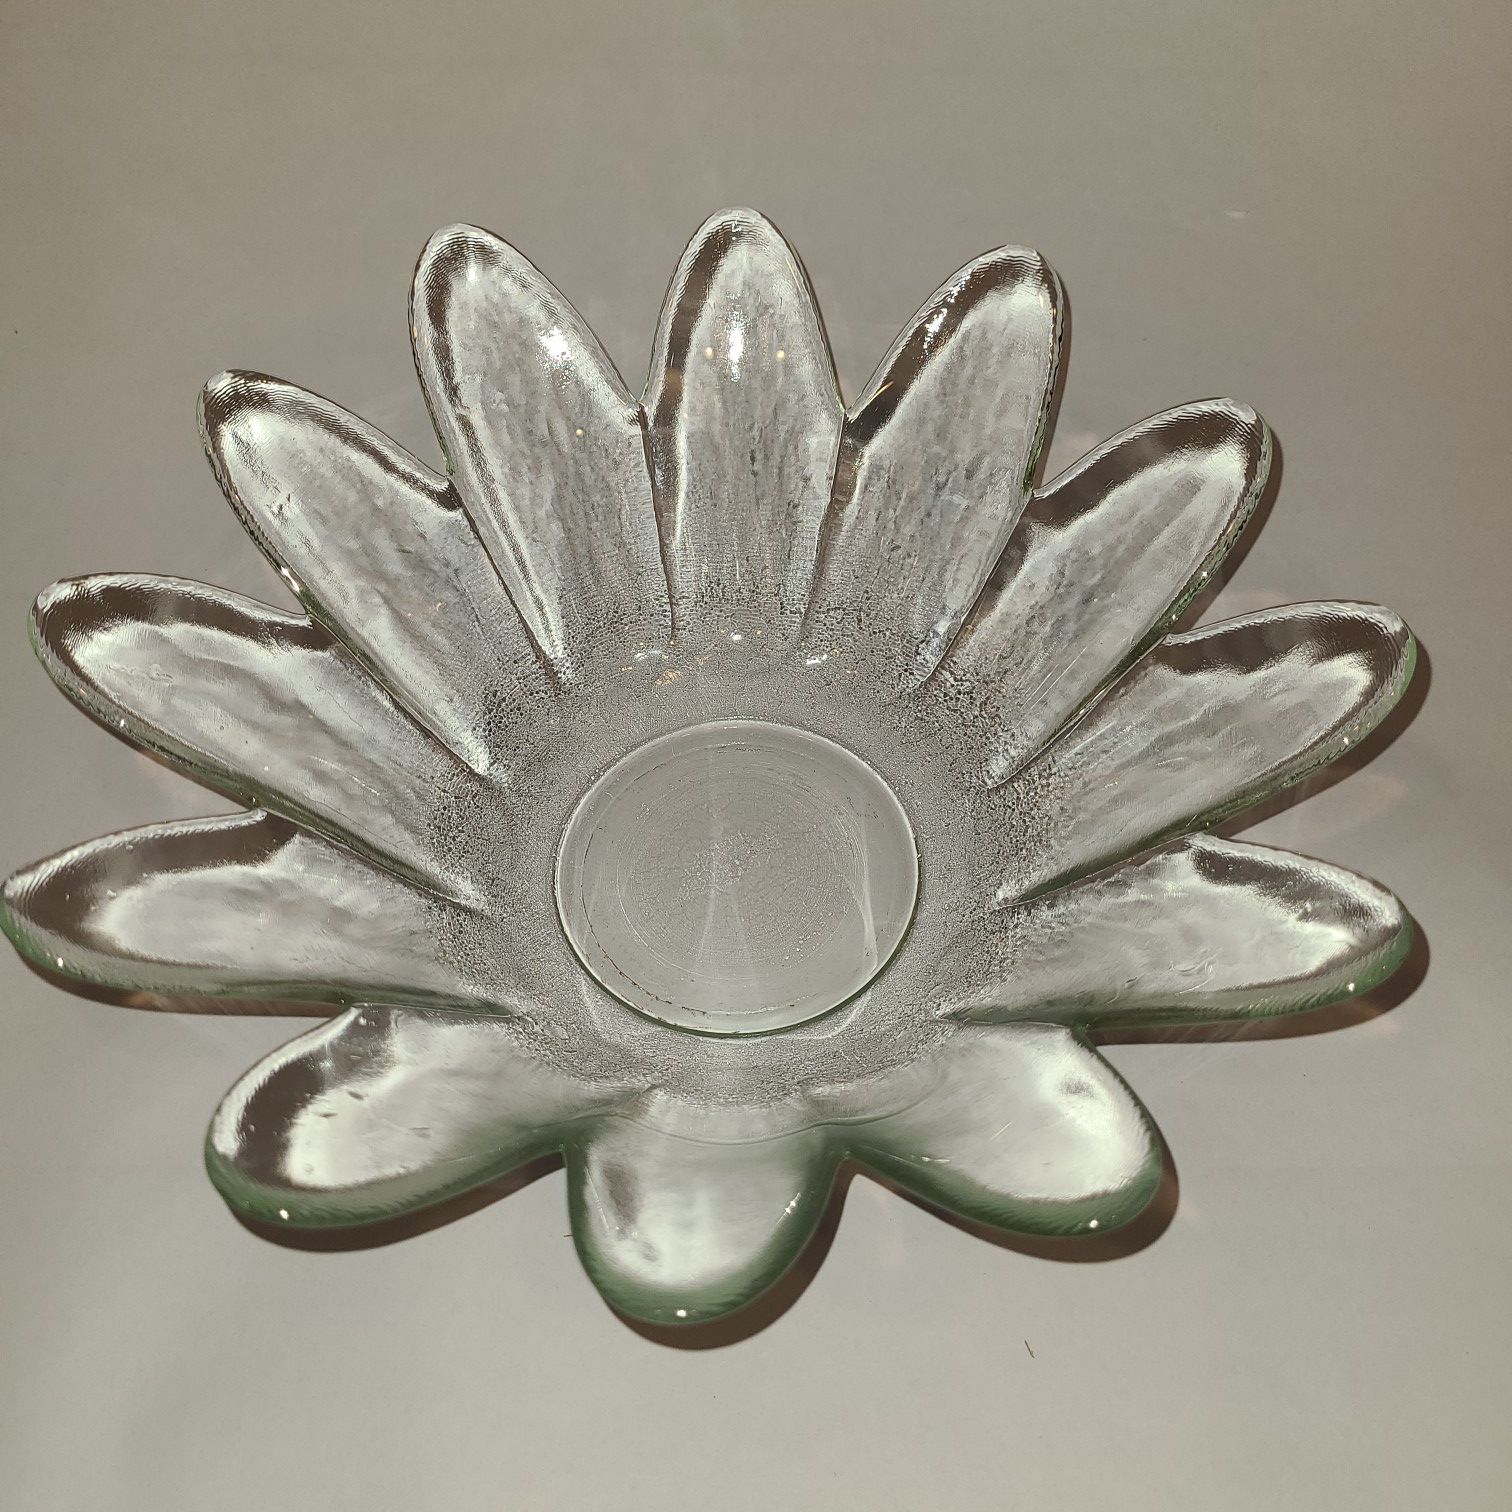 9" Glass decorative bowl